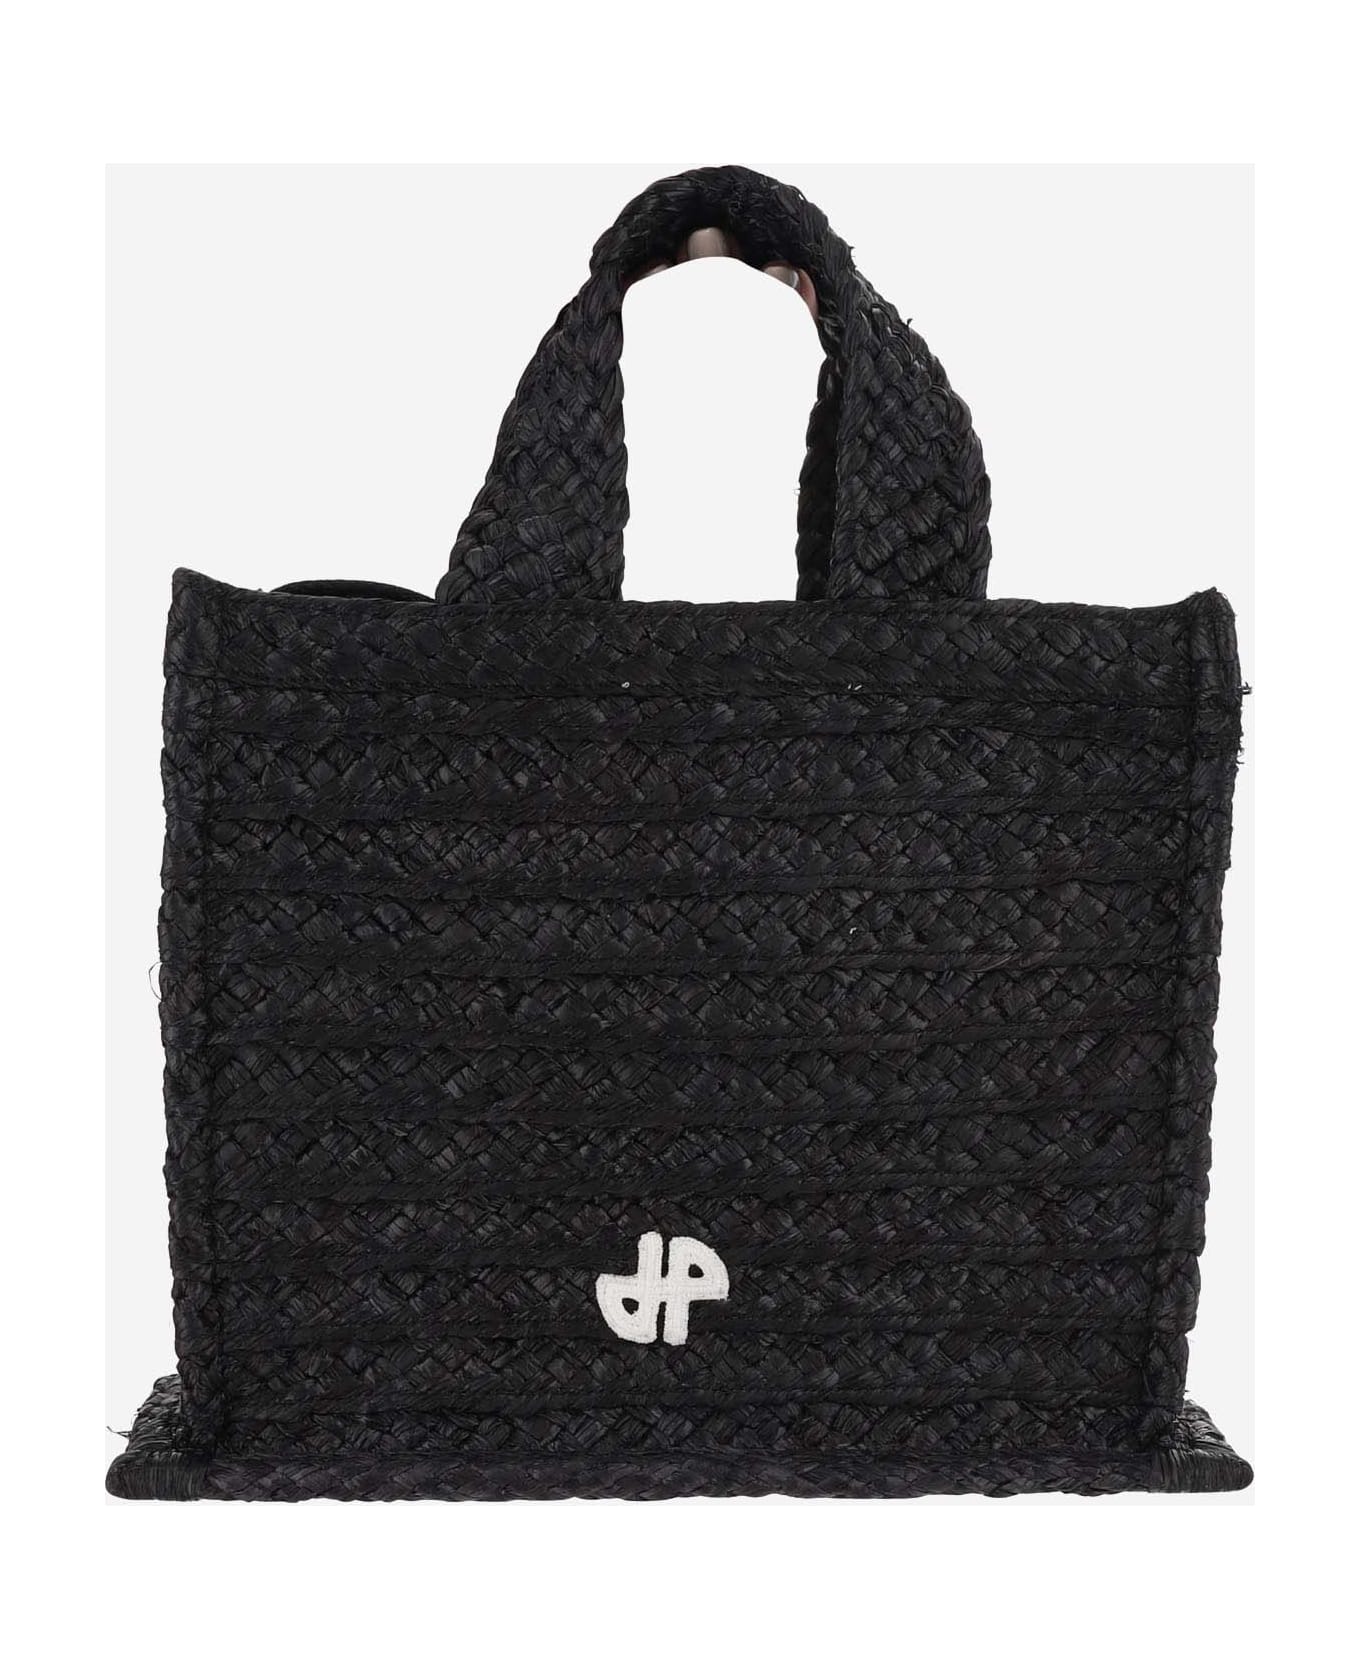 Patou Small Handbag "jp" - Black